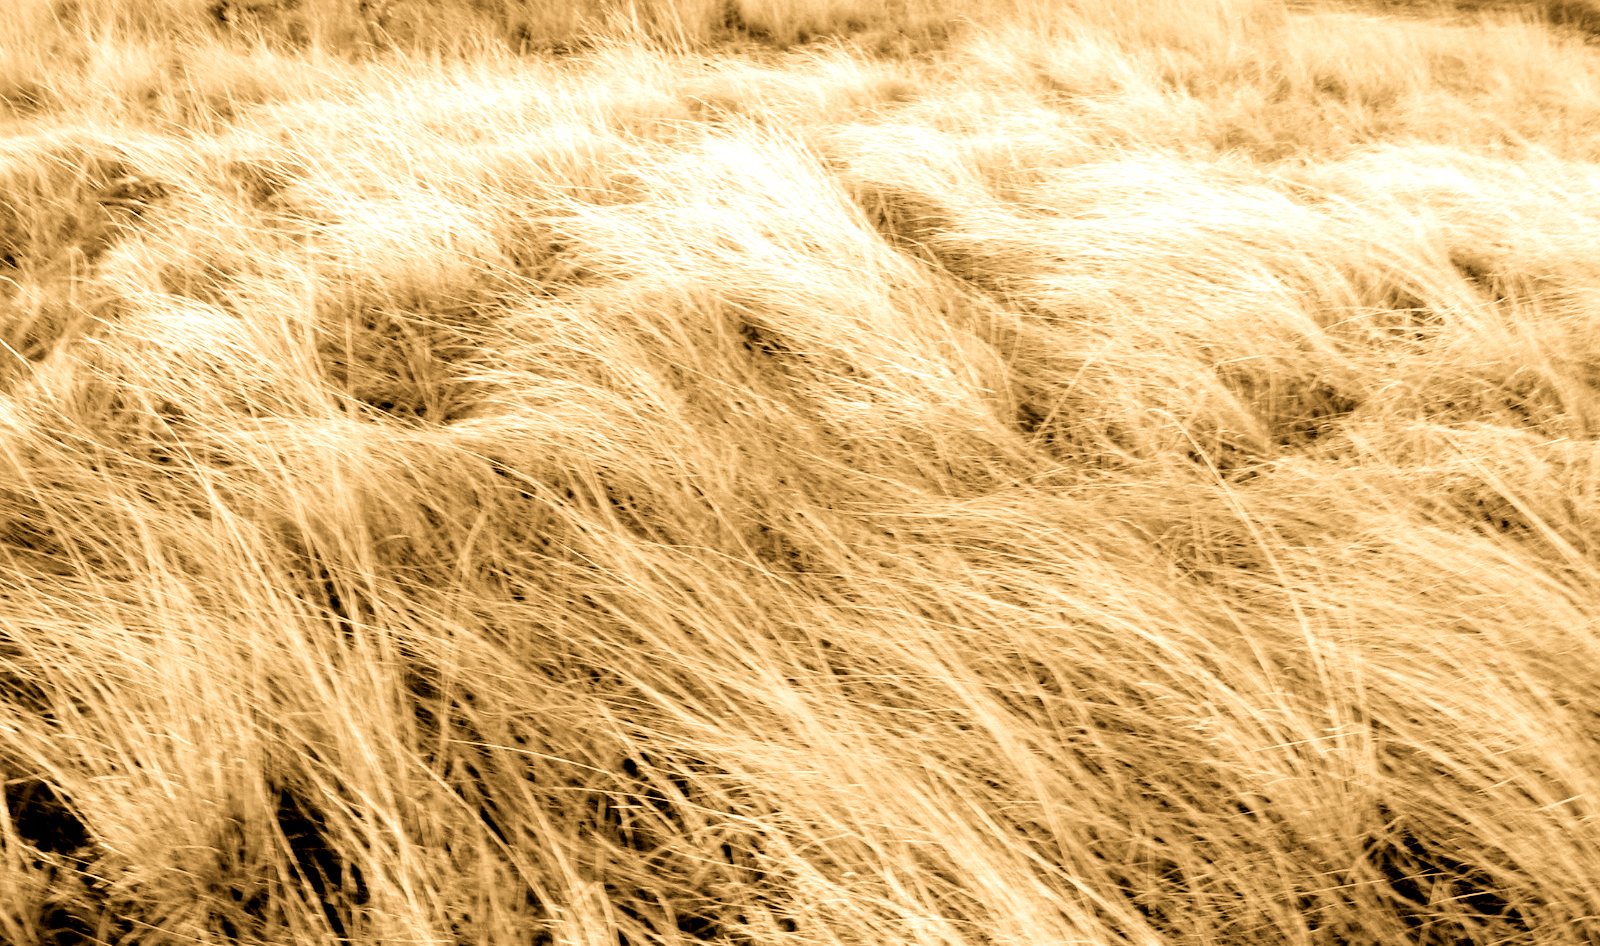 a close up s of a golden field